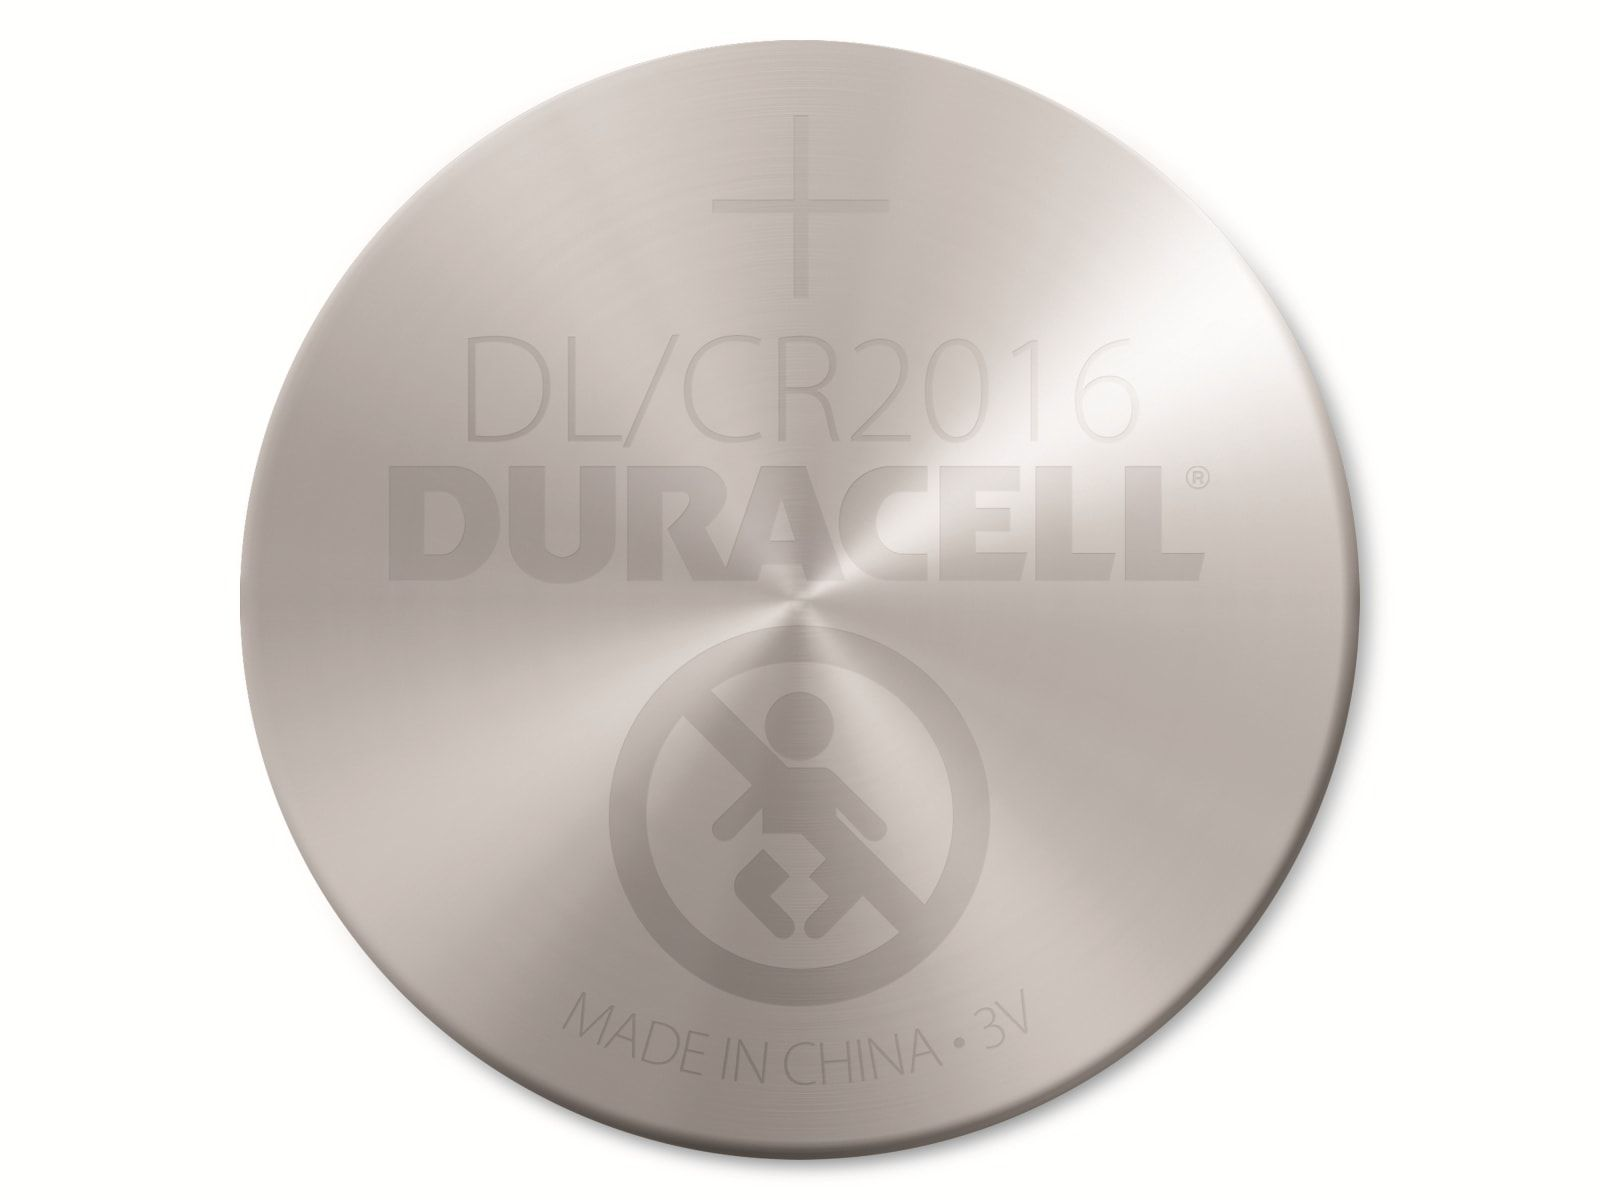 DURACELL Lithium-Knopfzelle CR2016, 3V, Lithium Batterien 5 Stück